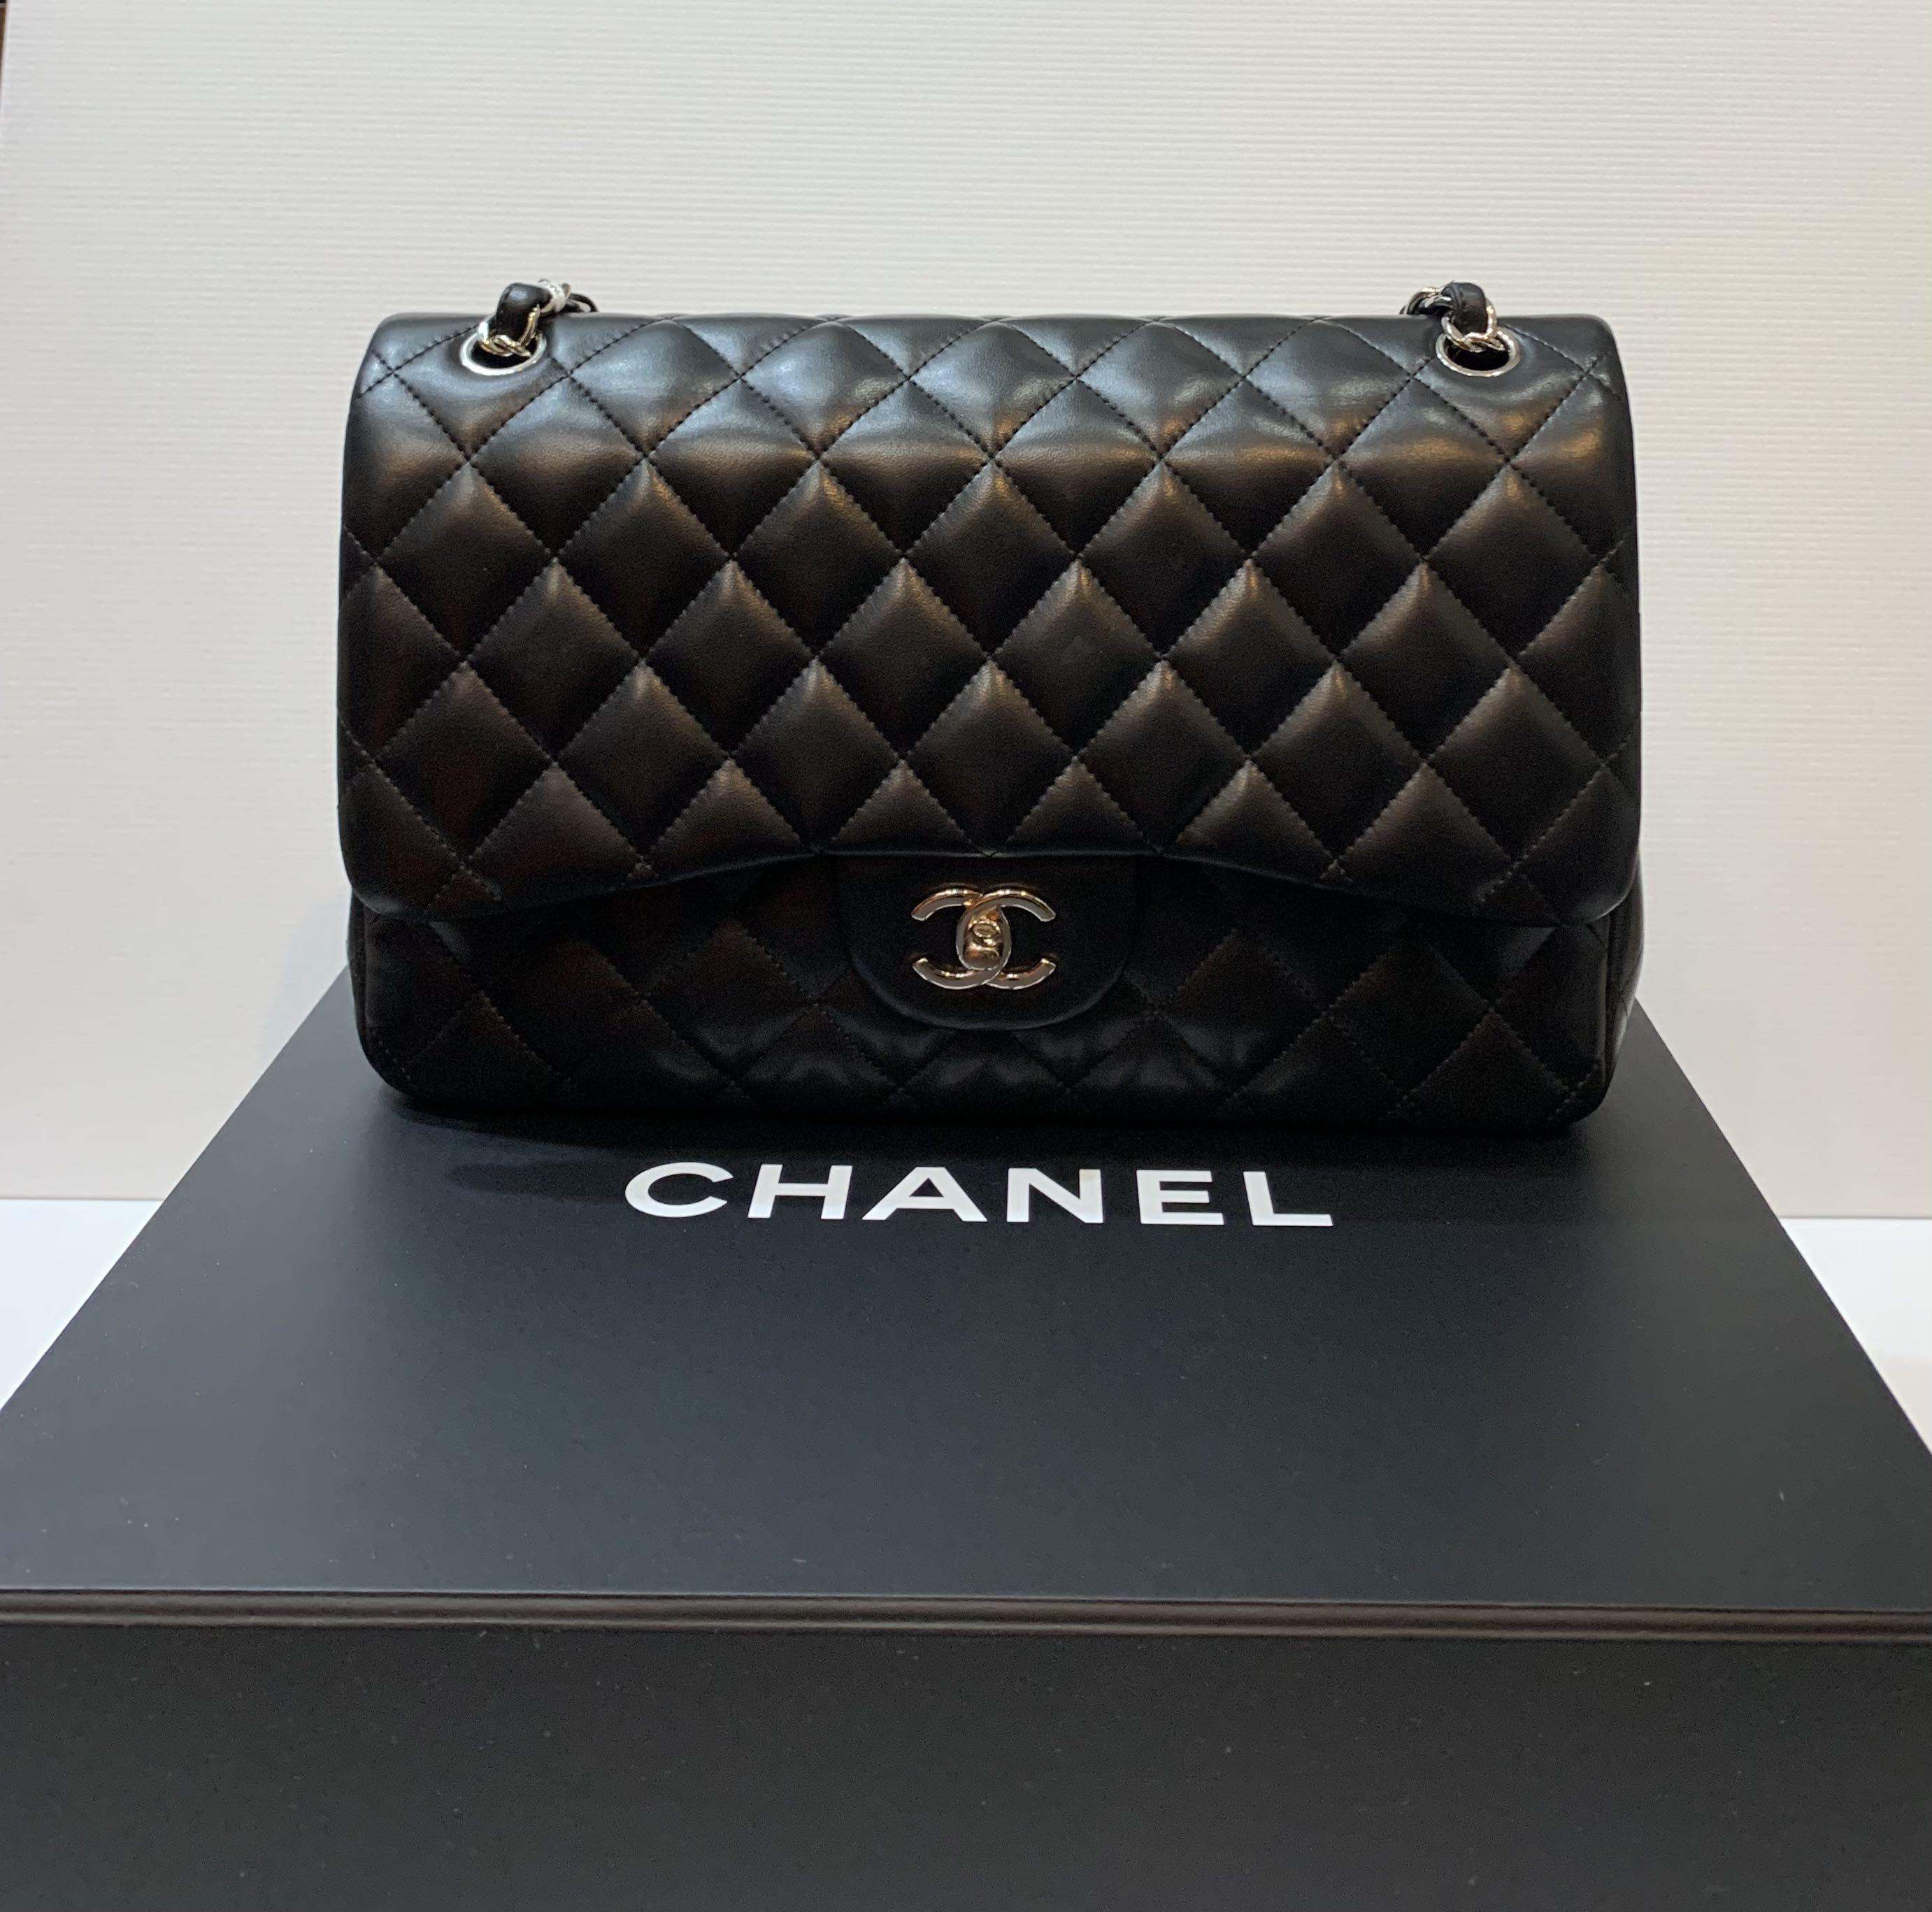 Chanel Jumbo Bag Women S Fashion Bags Wallets Shoulder Bags On